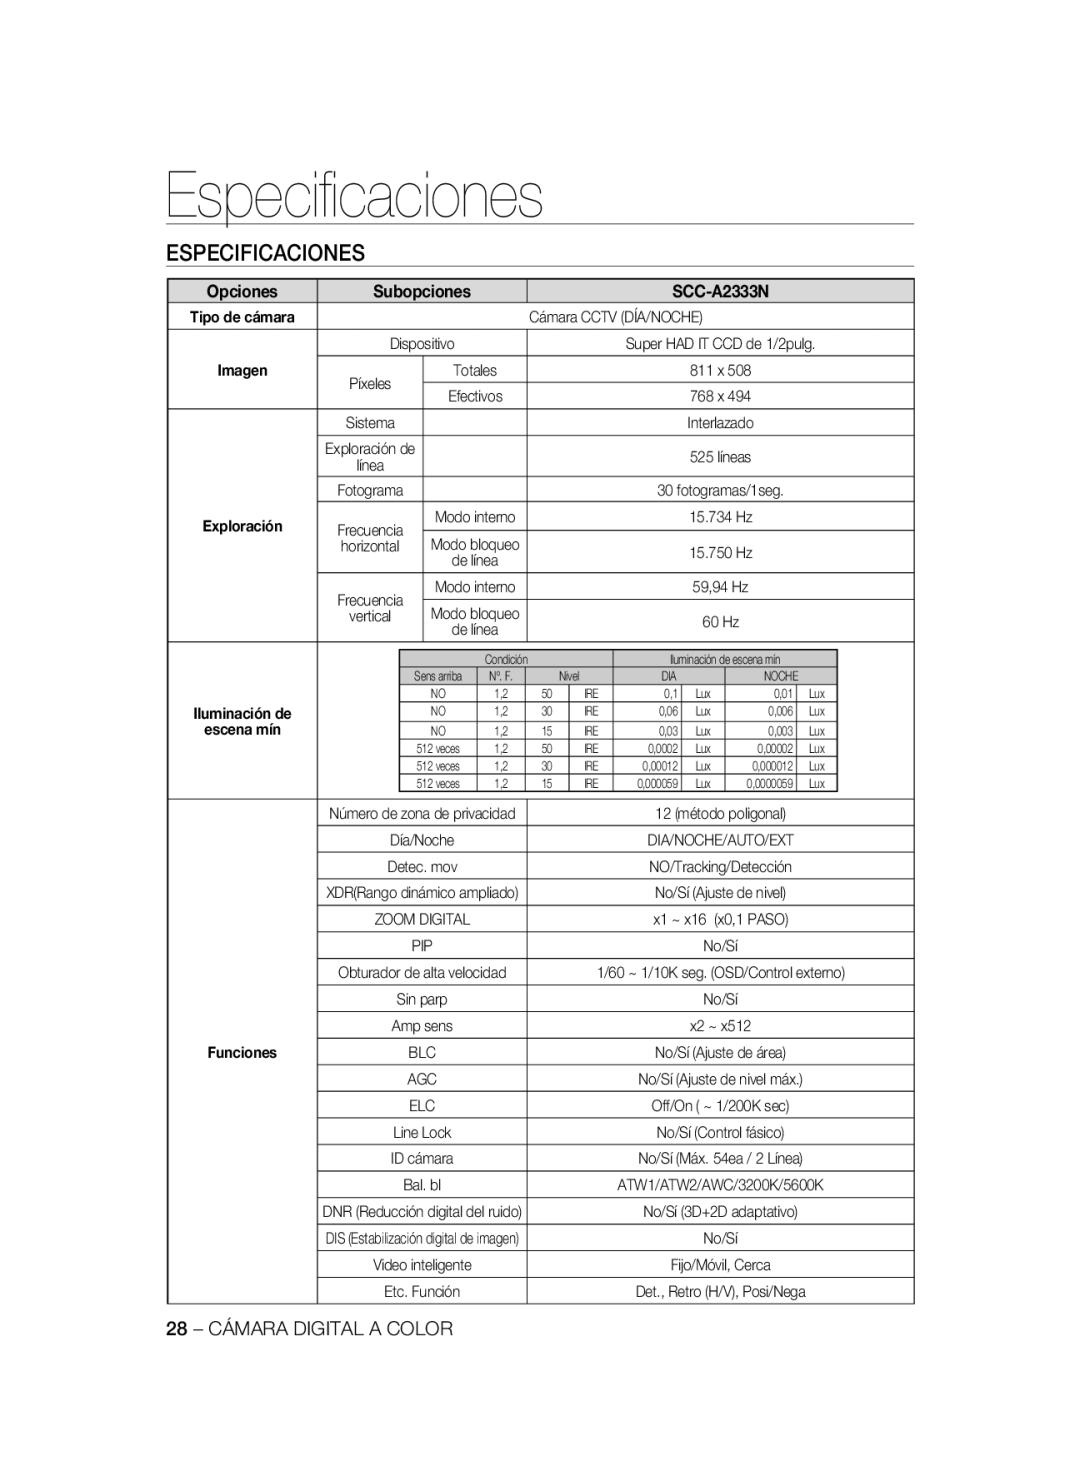 Samsung SCC-A2333P, SCC-A2033P manual Especiﬁcaciones, Especificaciones, Opciones, SCC-A2333N, Subopciones, escena mín 